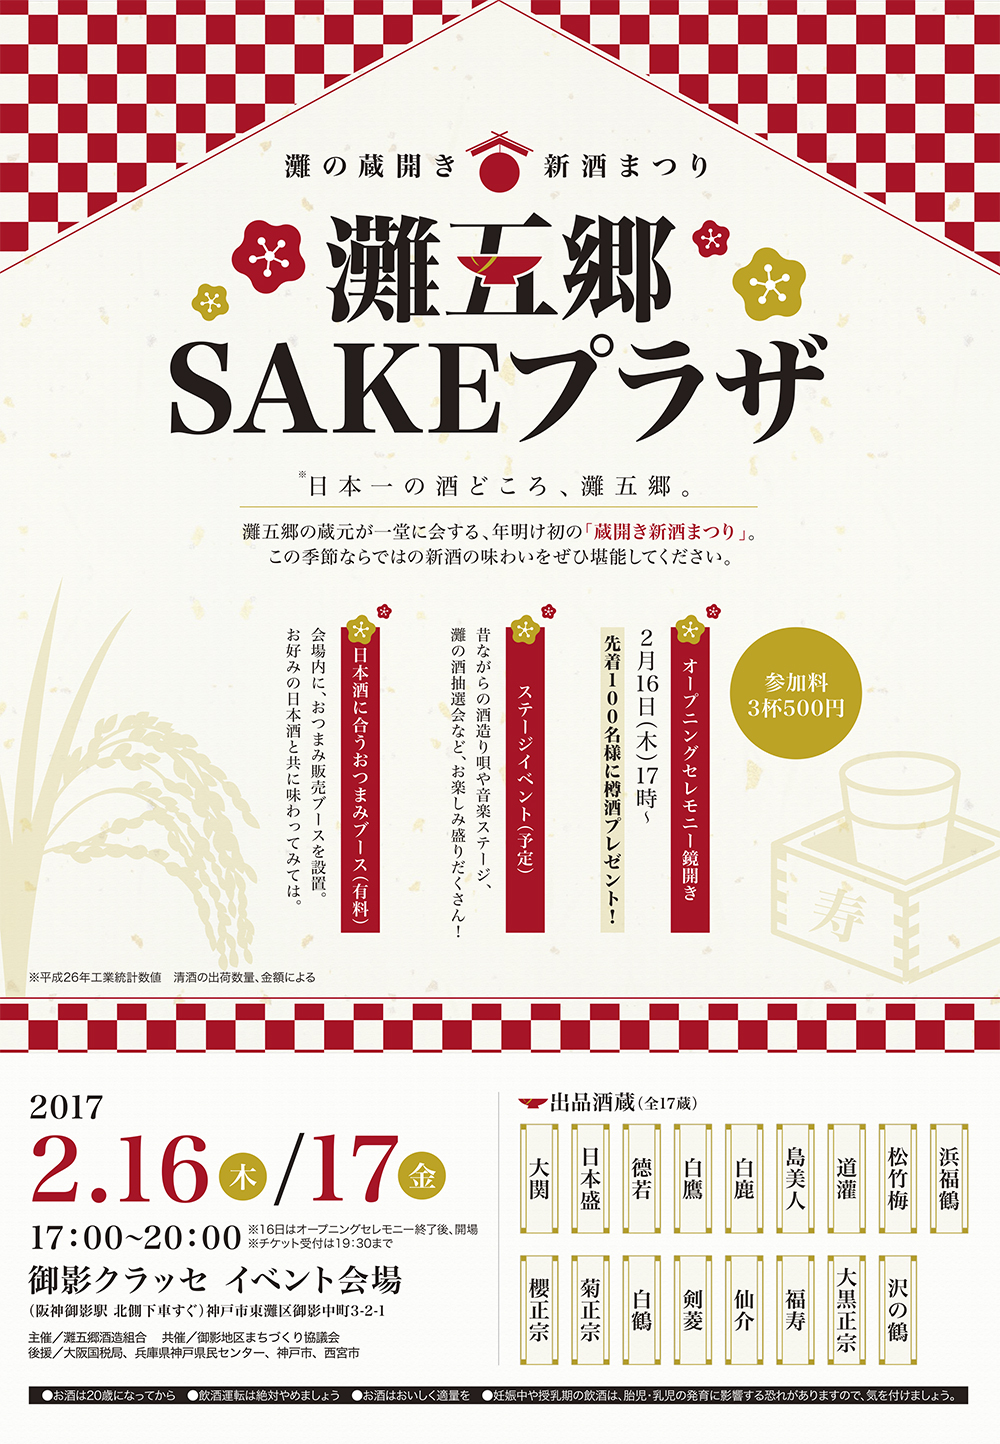 http://www.hakushika.co.jp/topics/images/2017nadagogosakeplaza_poster.jpg